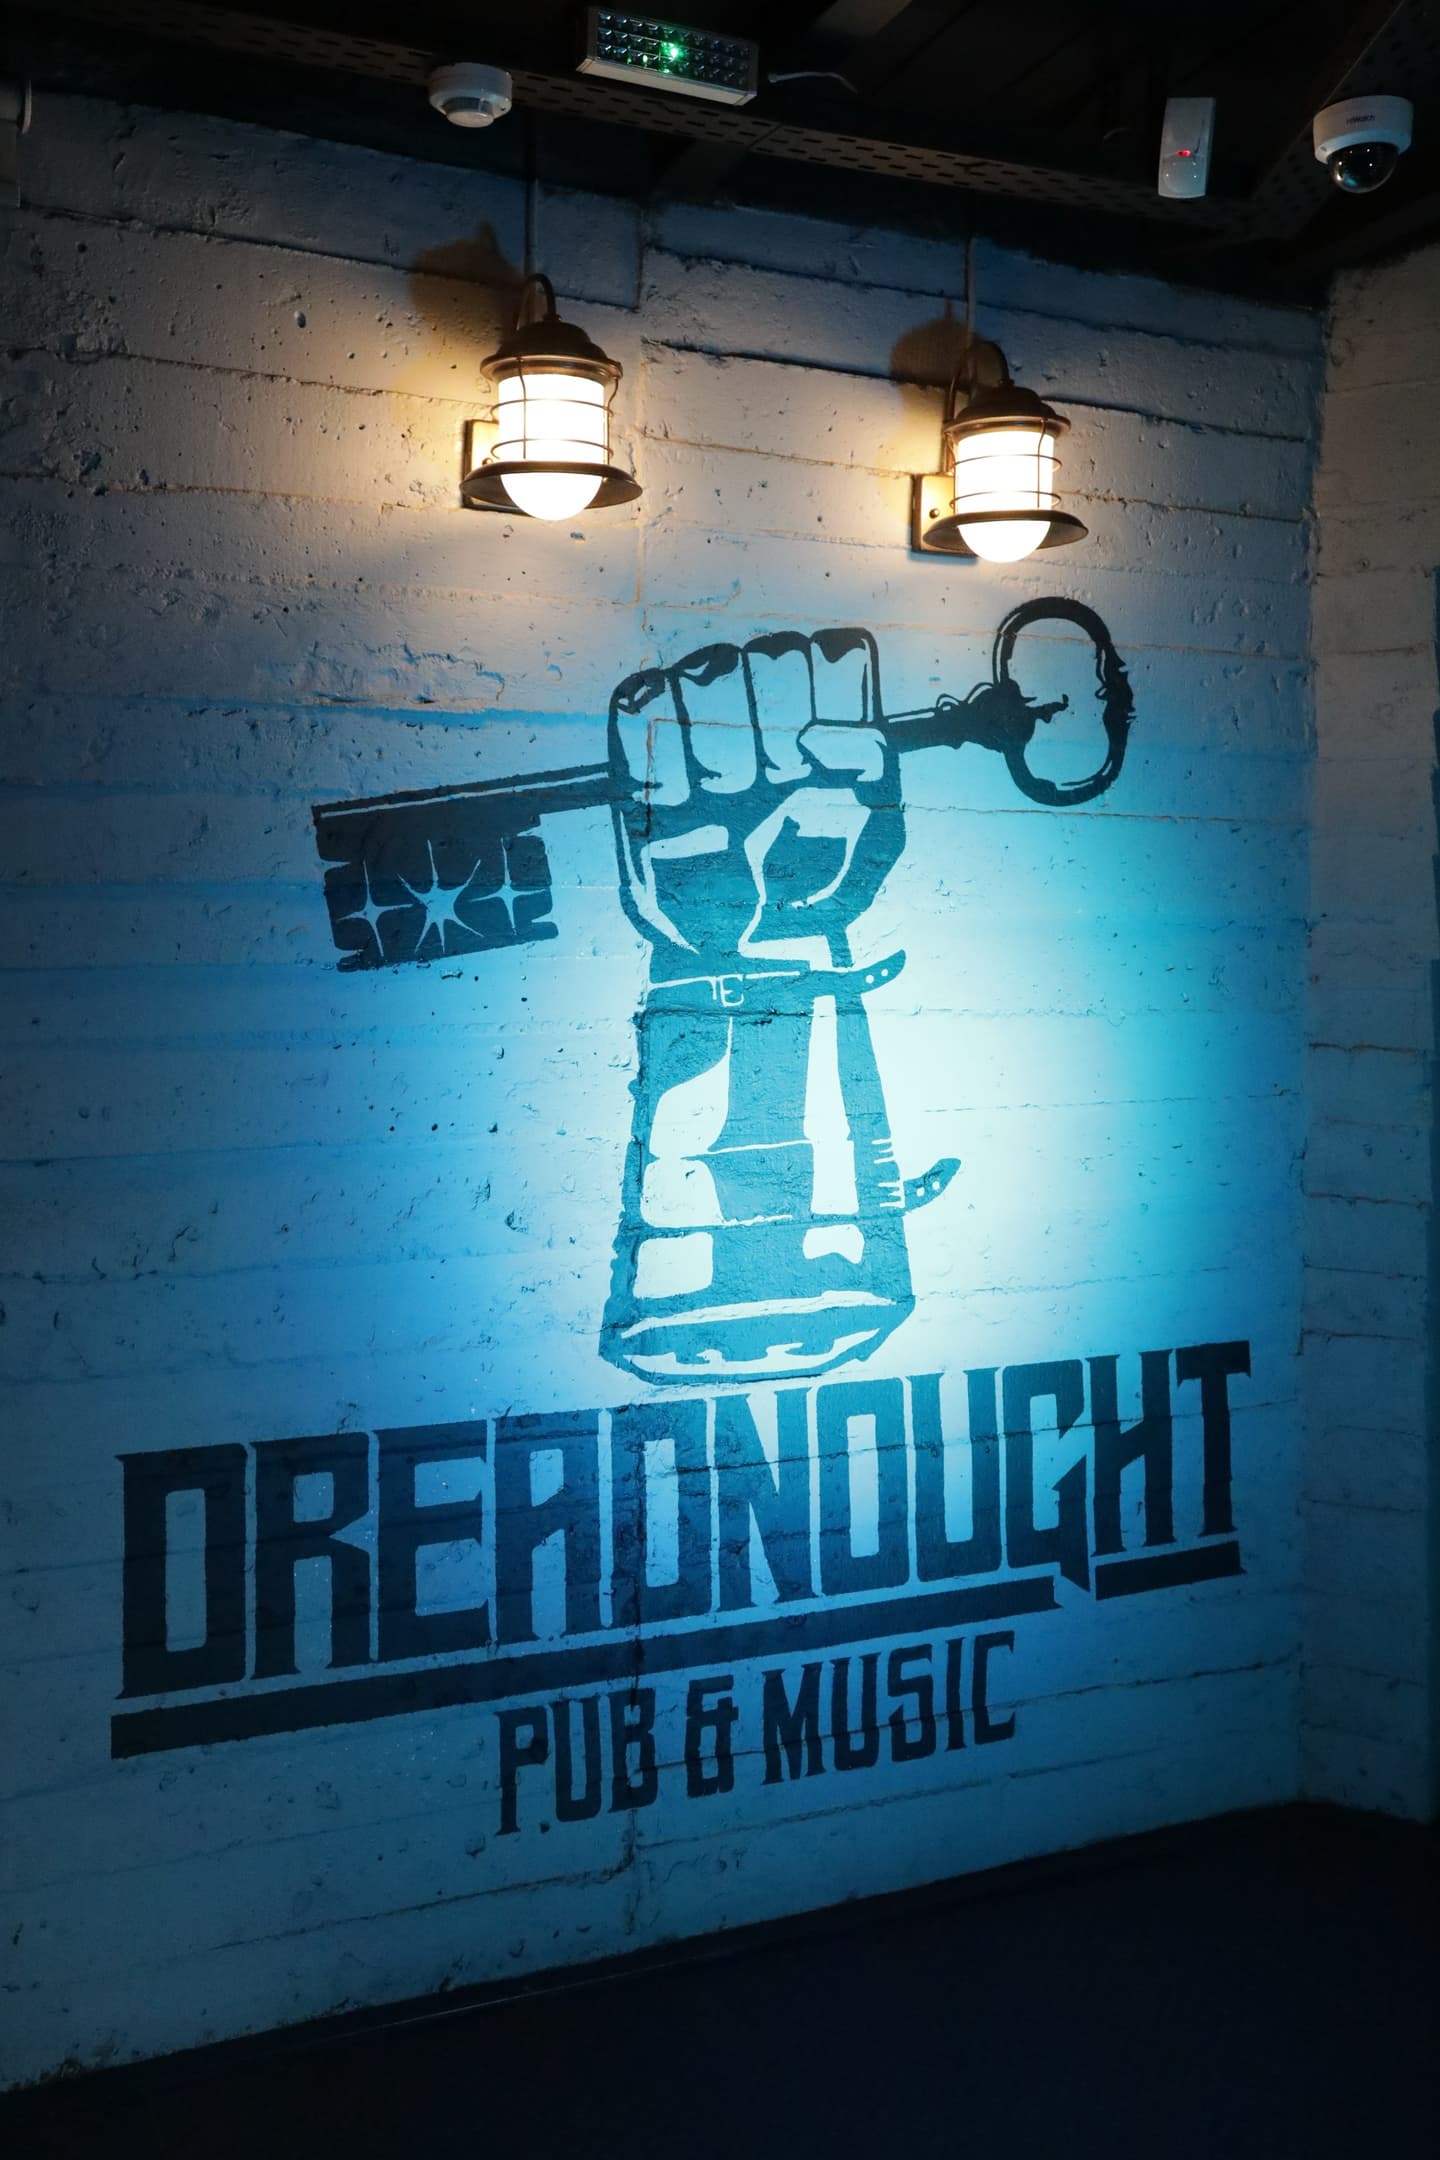 Bar "Dreadnought" 